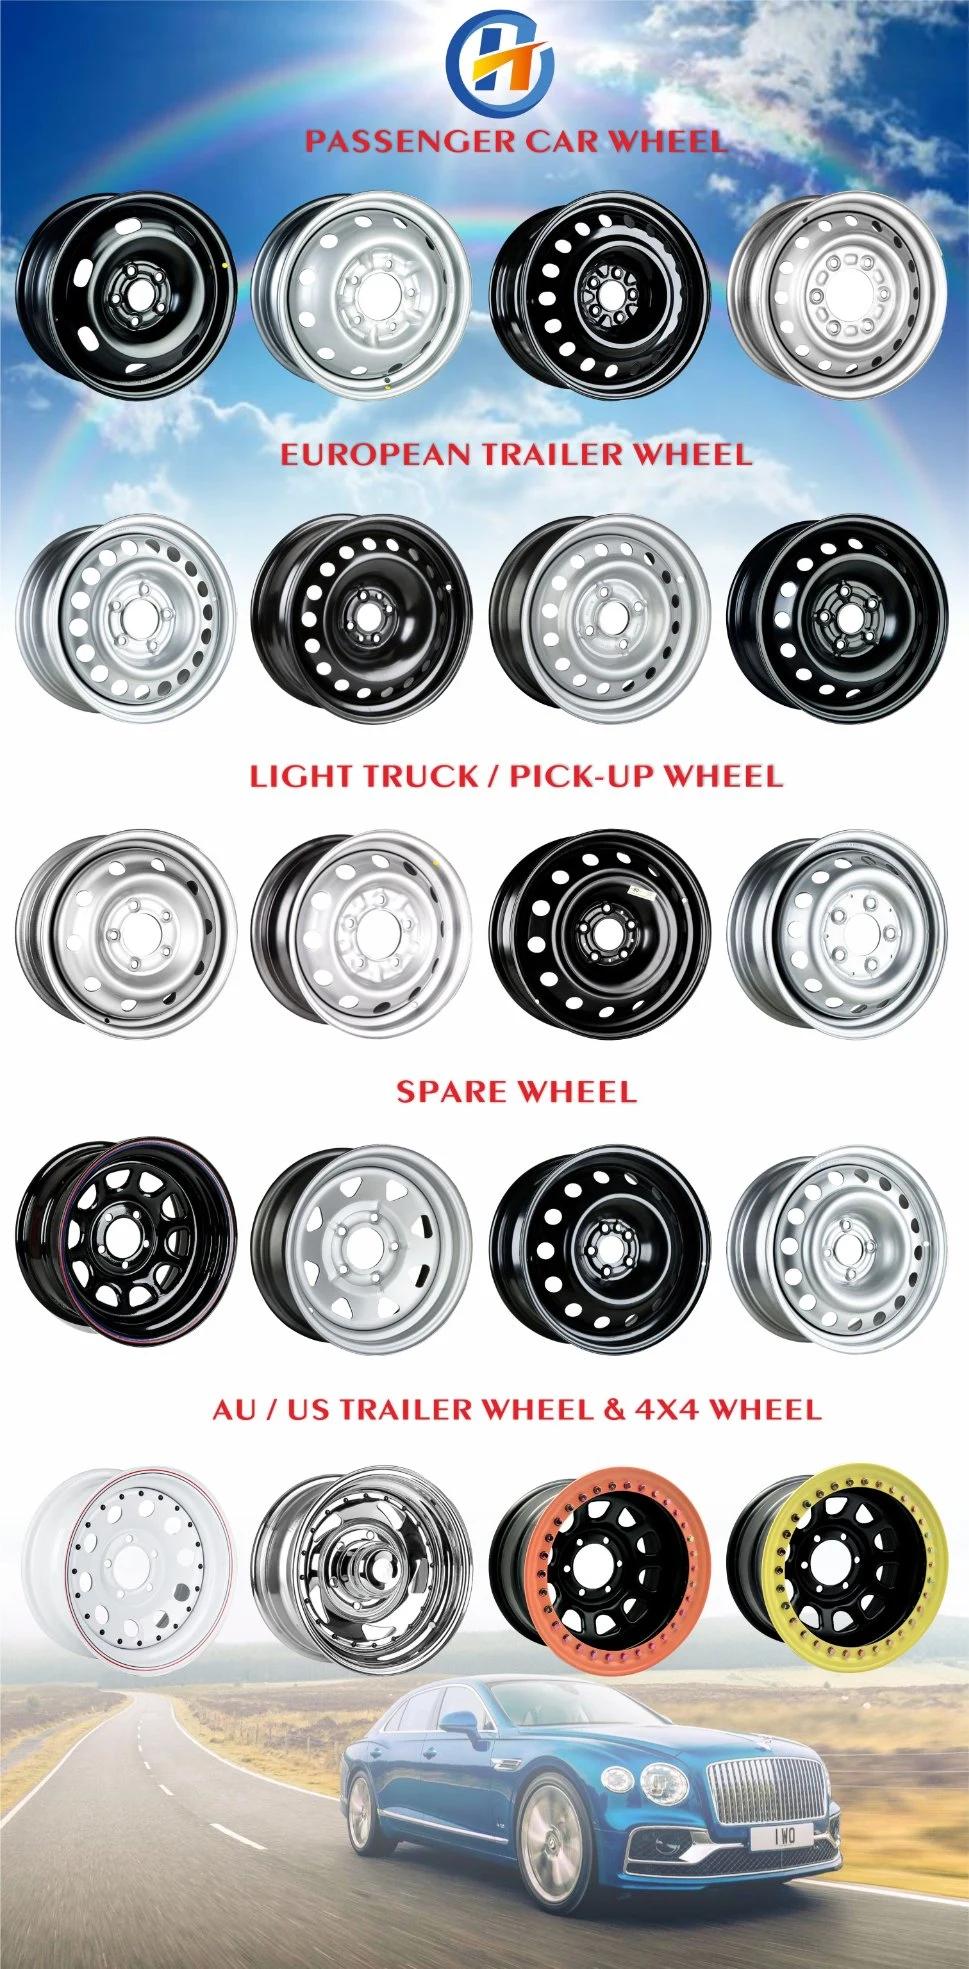 H&T Wheel 675203 16 Inch 16X6.5 PCD 5X100 Black Steel Snow Wheel Rim